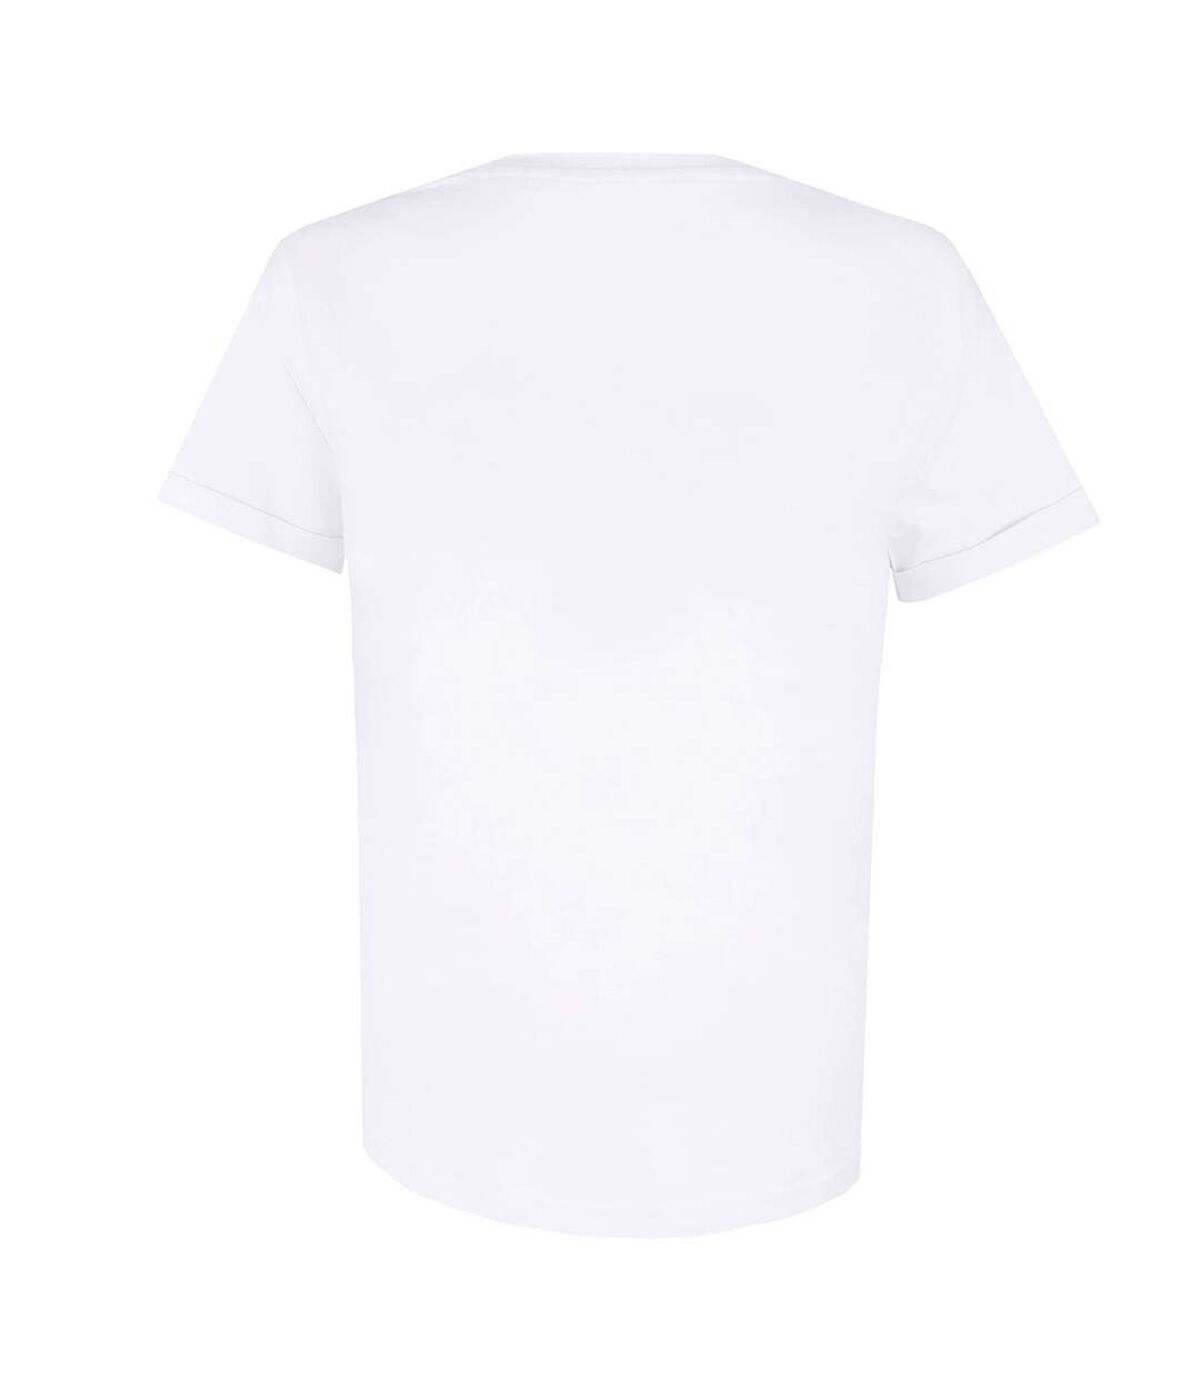 Disney - T-shirt MICKEY GIGGLES - Femme (Blanc) - UTTV1249